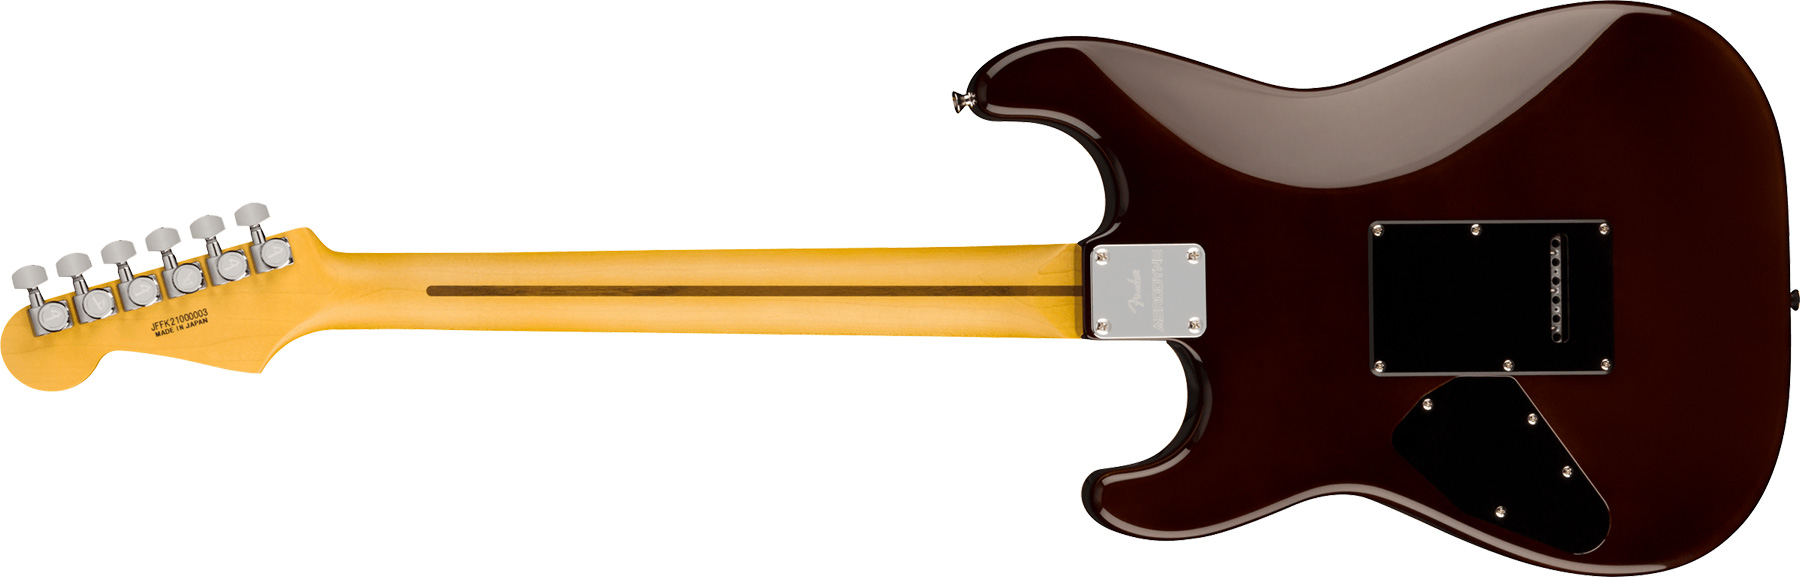 Fender Strat Aerodyne Special Jap 3s Trem Rw - Chocolate Burst - E-Gitarre in Str-Form - Variation 1